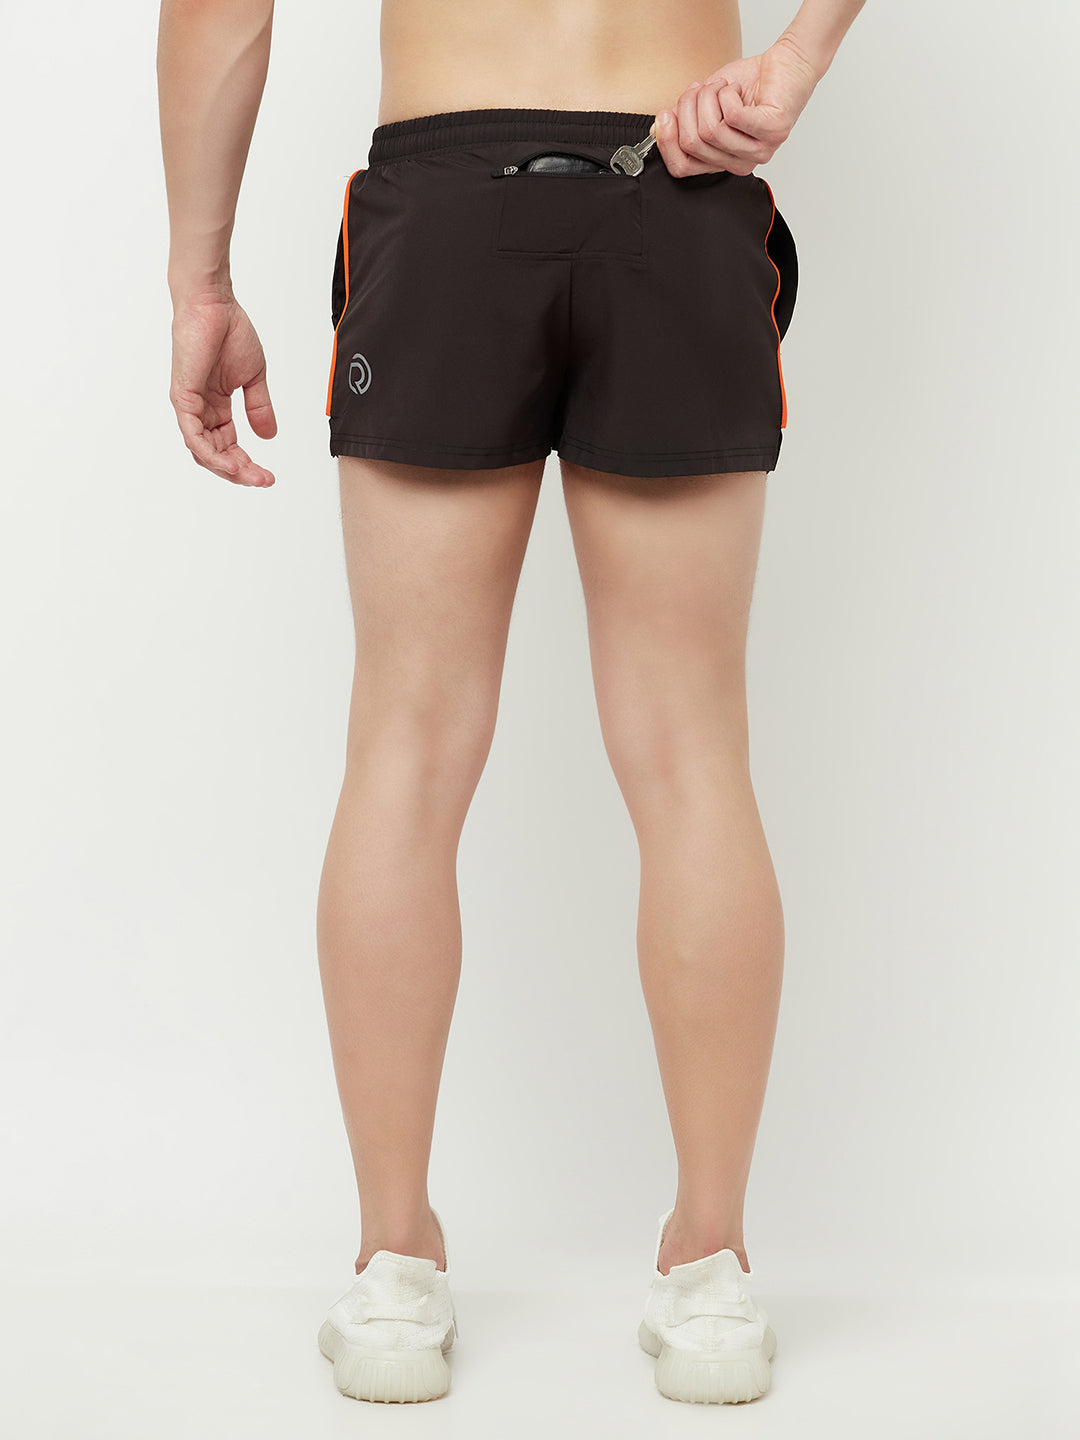 Men's Sports Shorts with Zipper Pocket- White TRUEREVO™